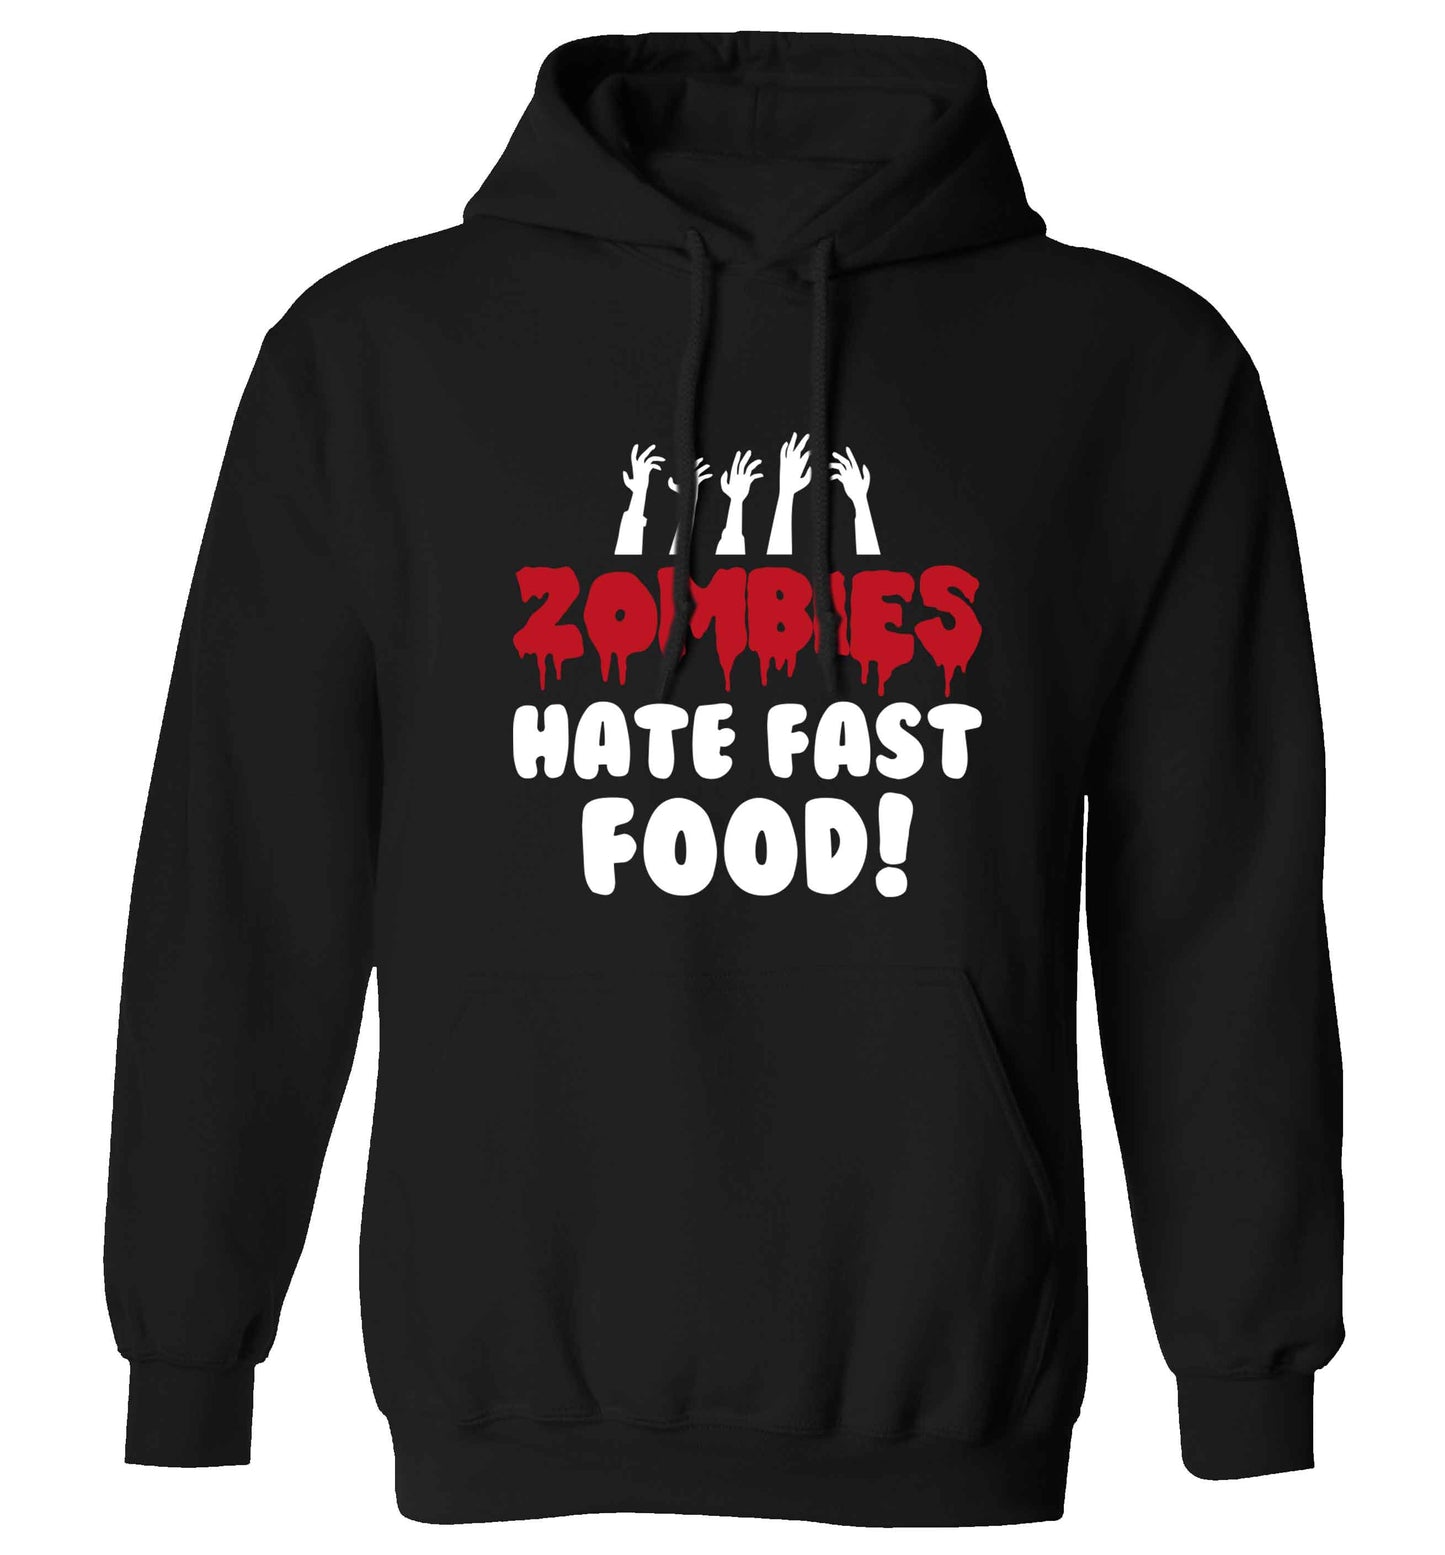 Zombies hate fast food adults unisex black hoodie 2XL